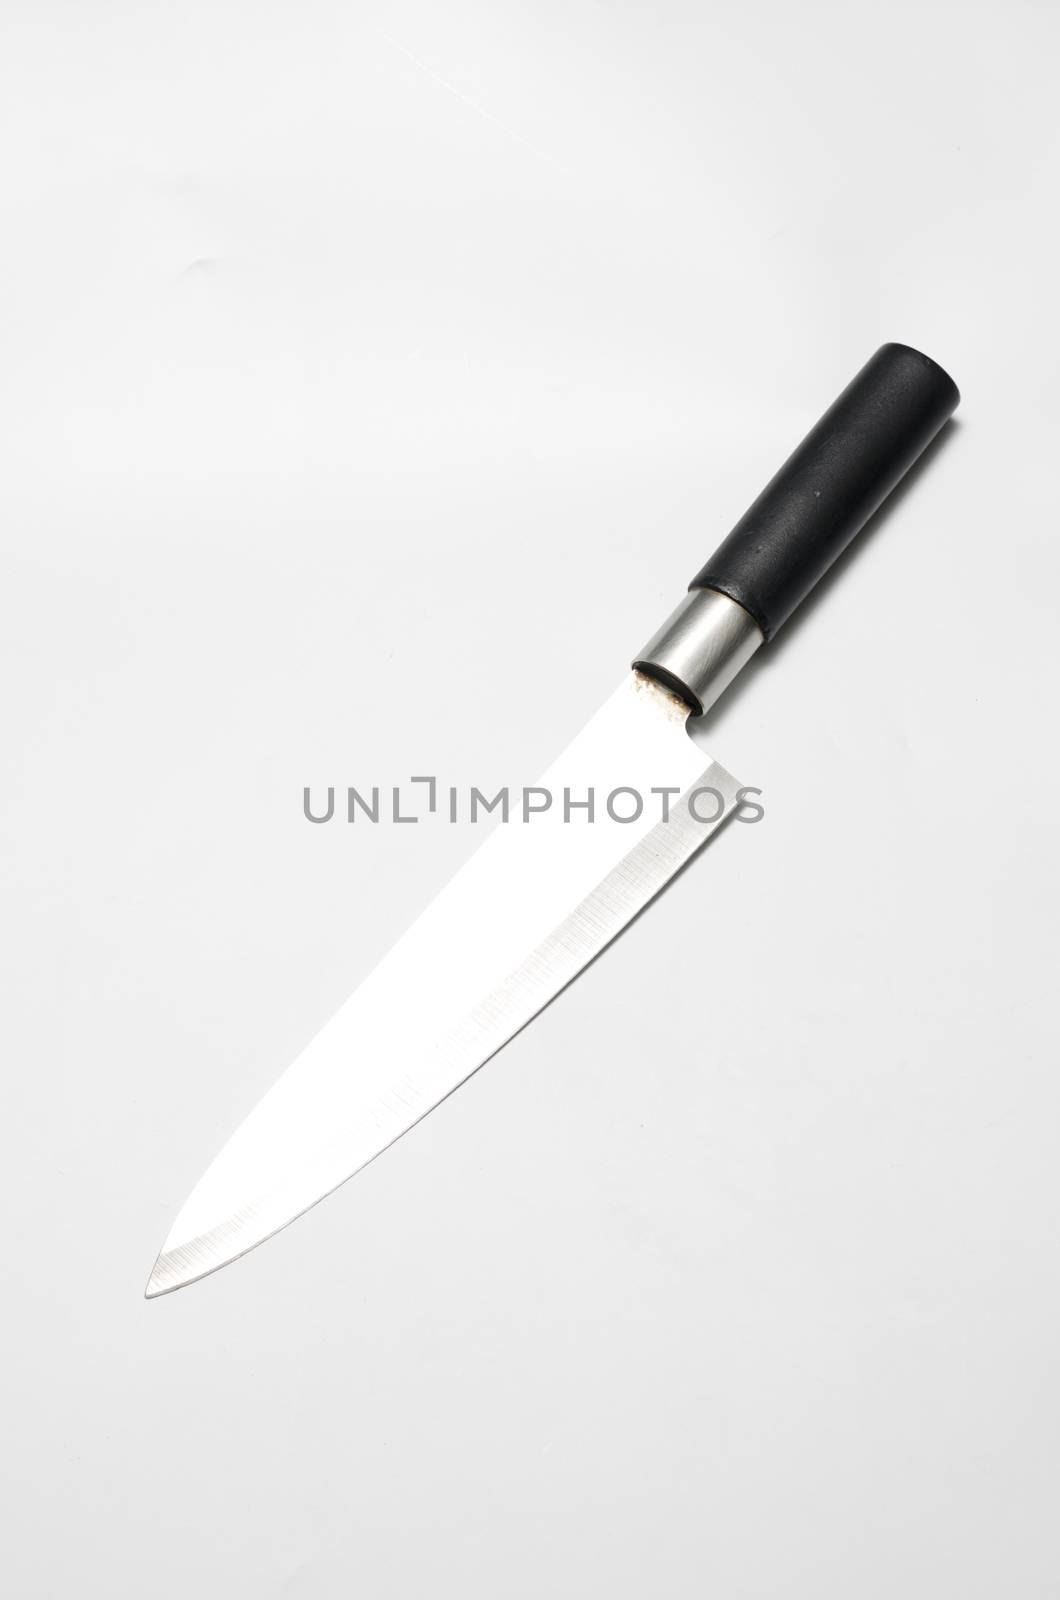 kitchen knife on a white background